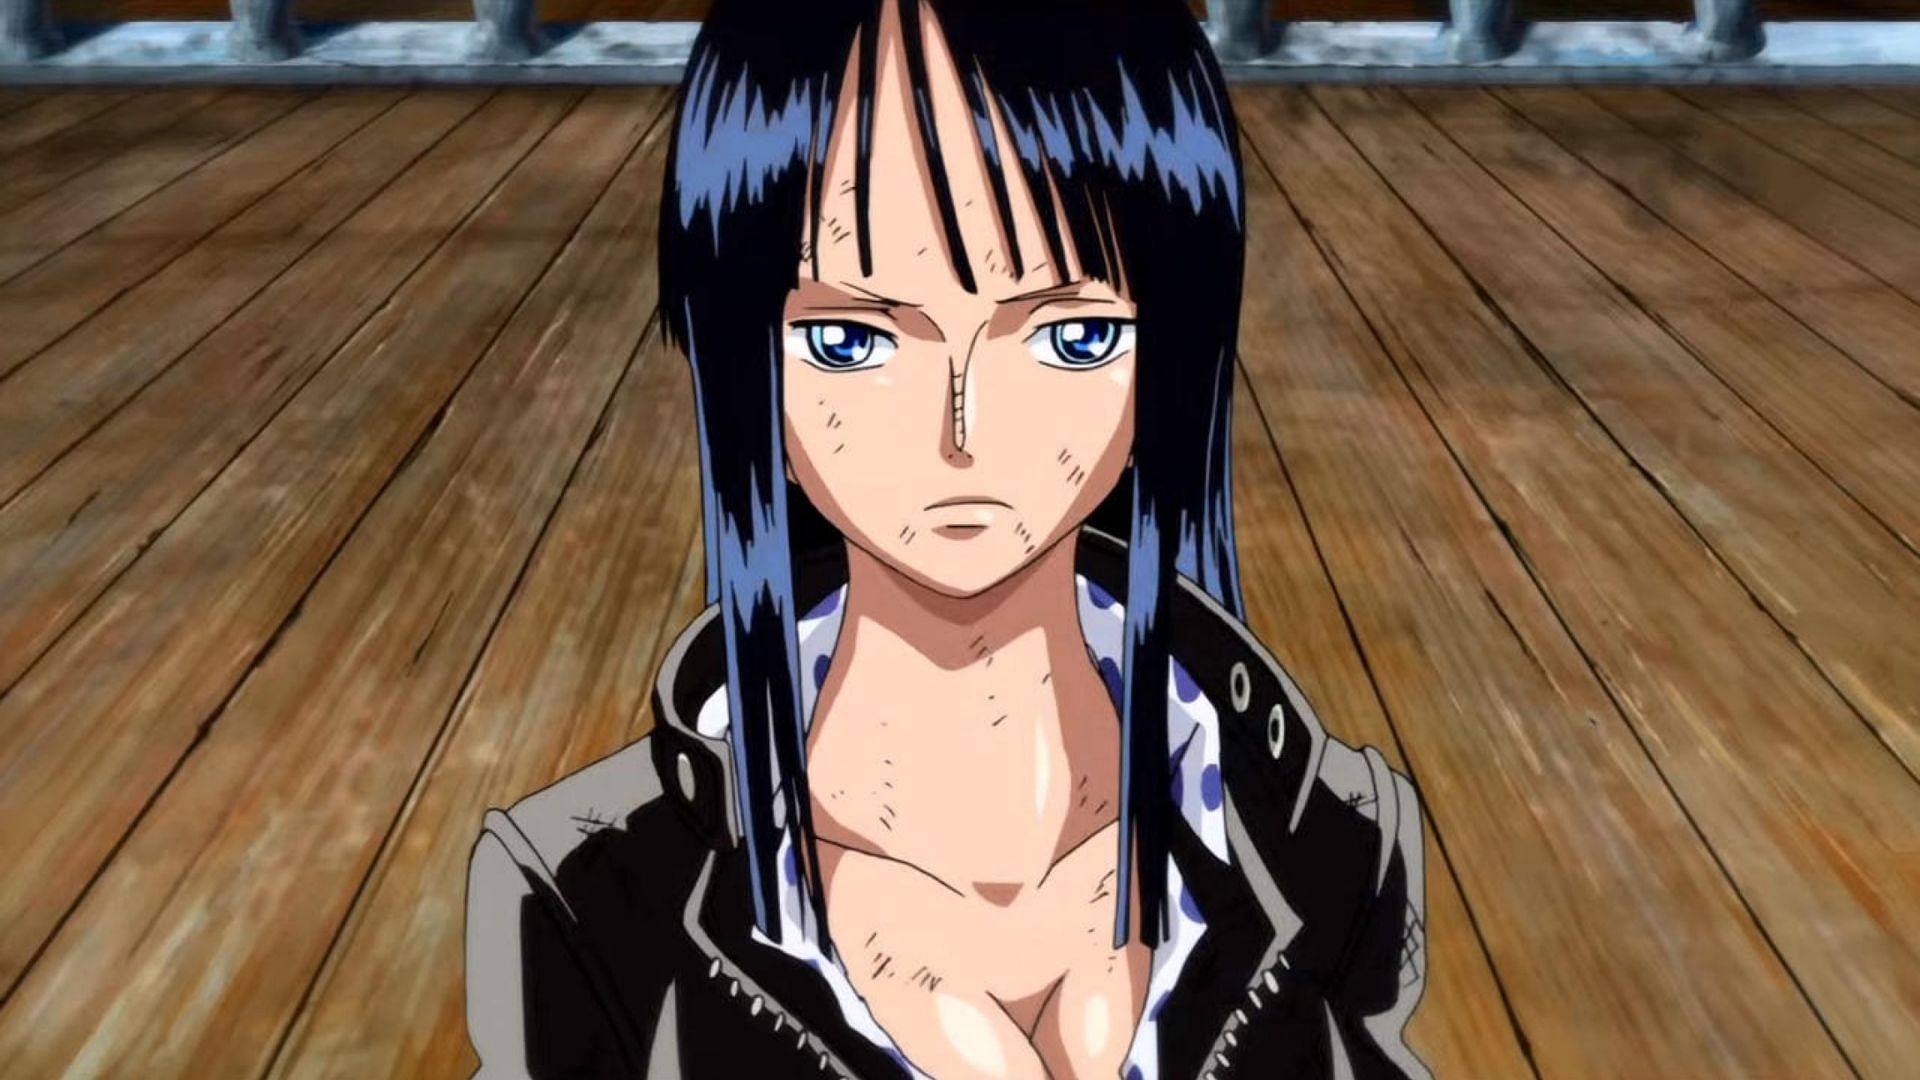 Nico Robin as shown in One Piece anime (Image via Toei Animation)